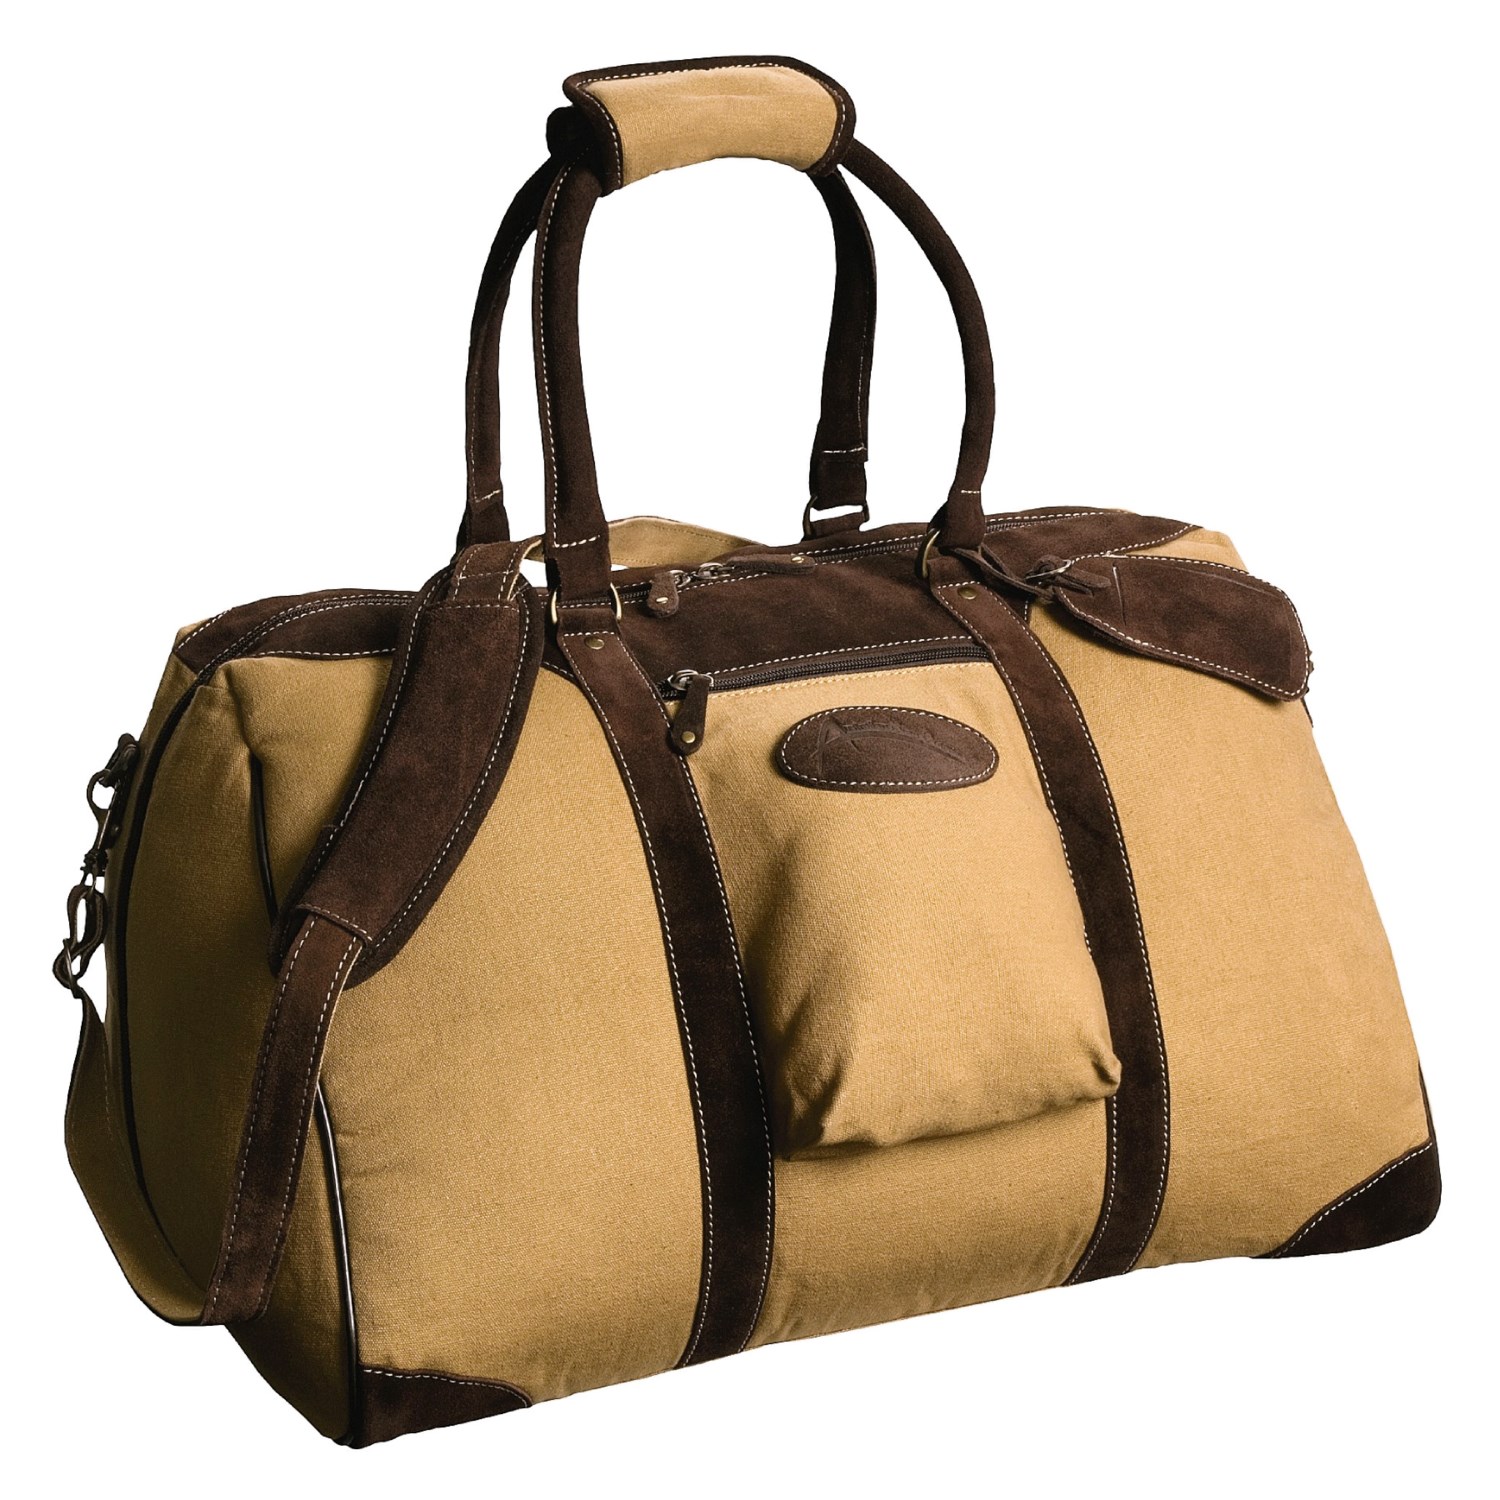 Australian Bag Outfitters Whacka Duffel Bag - Medium 83379 - Save 44%